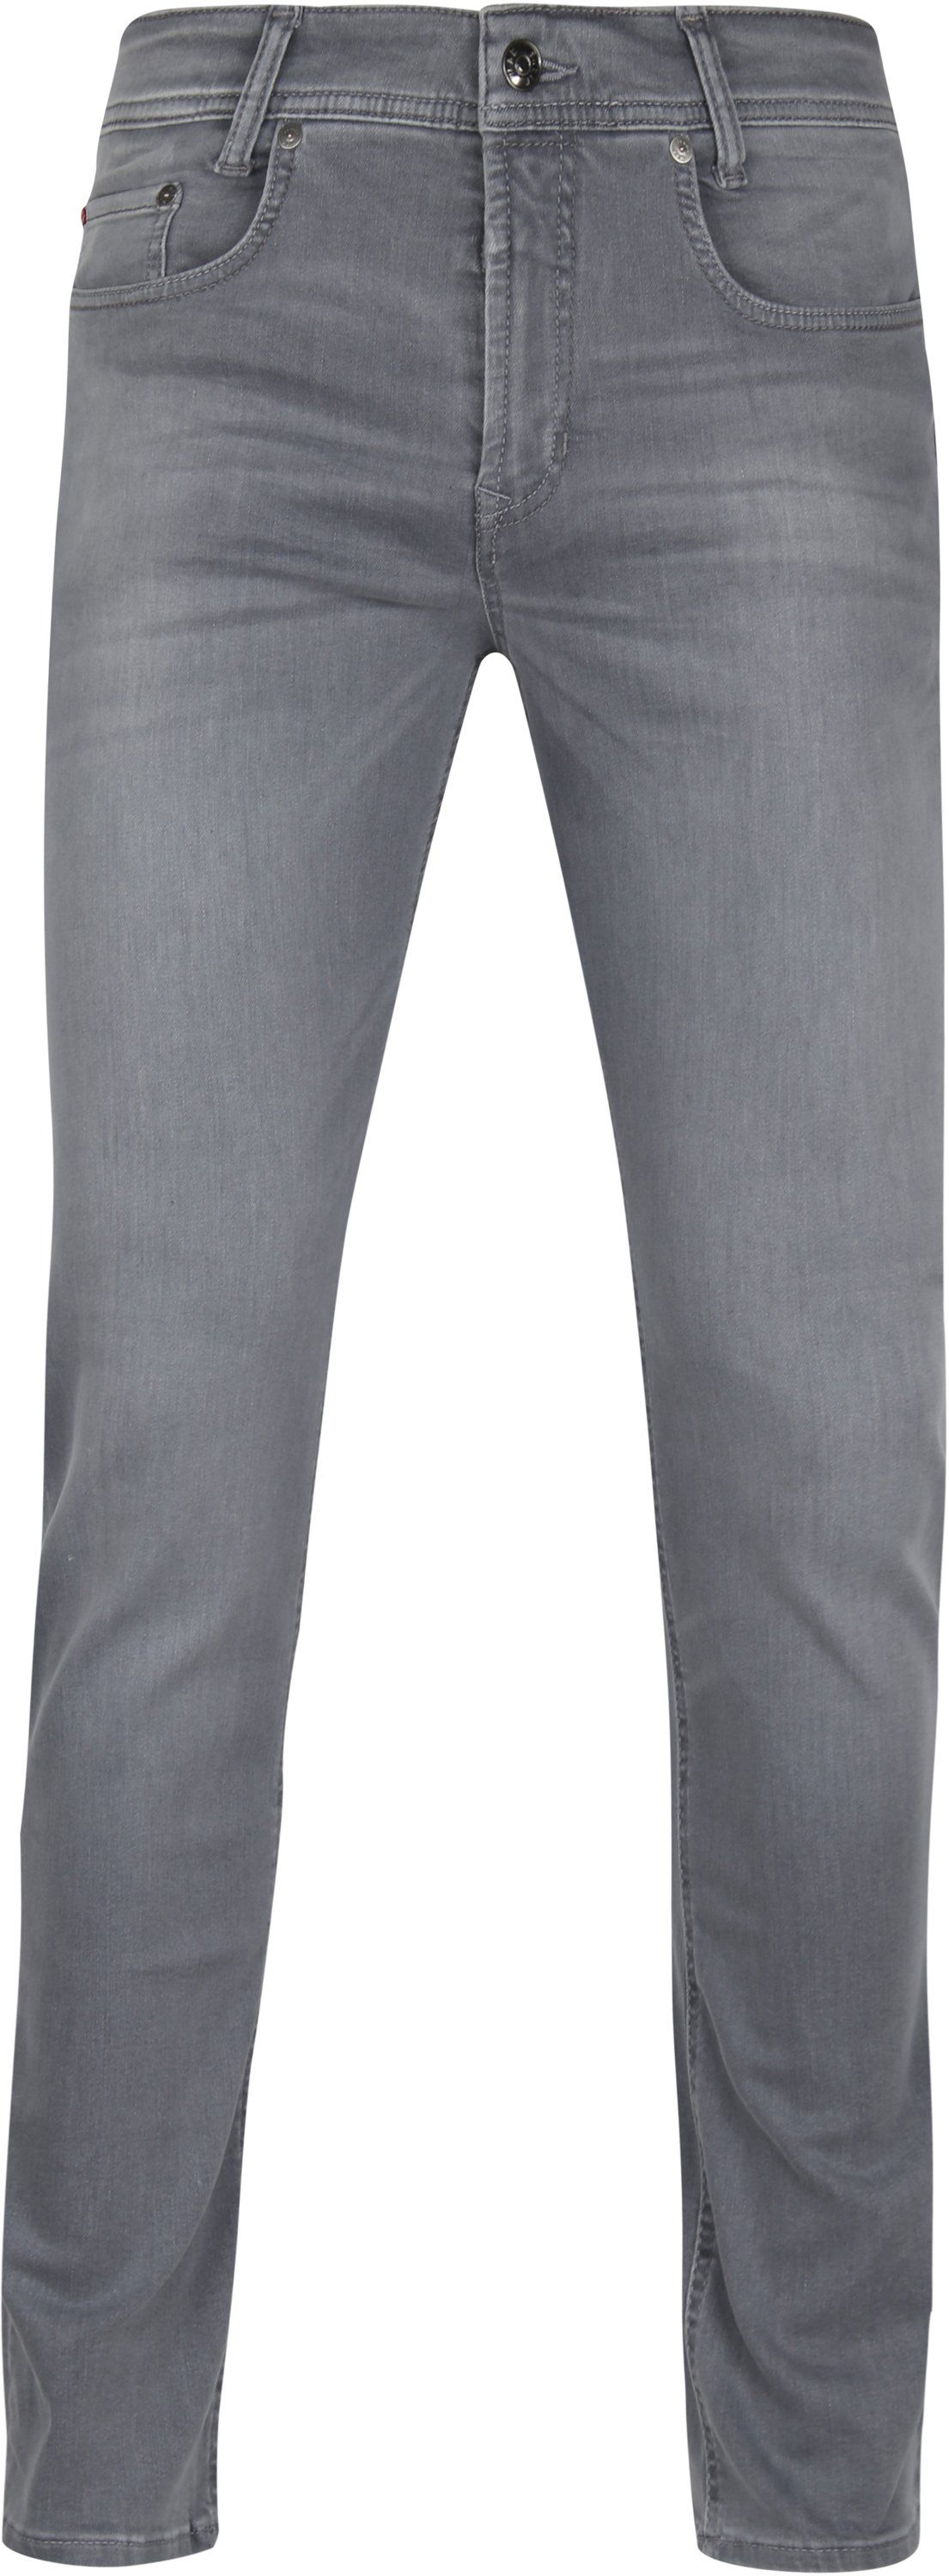 Mac Jeans Flexx Driver Pants Grey size W 31